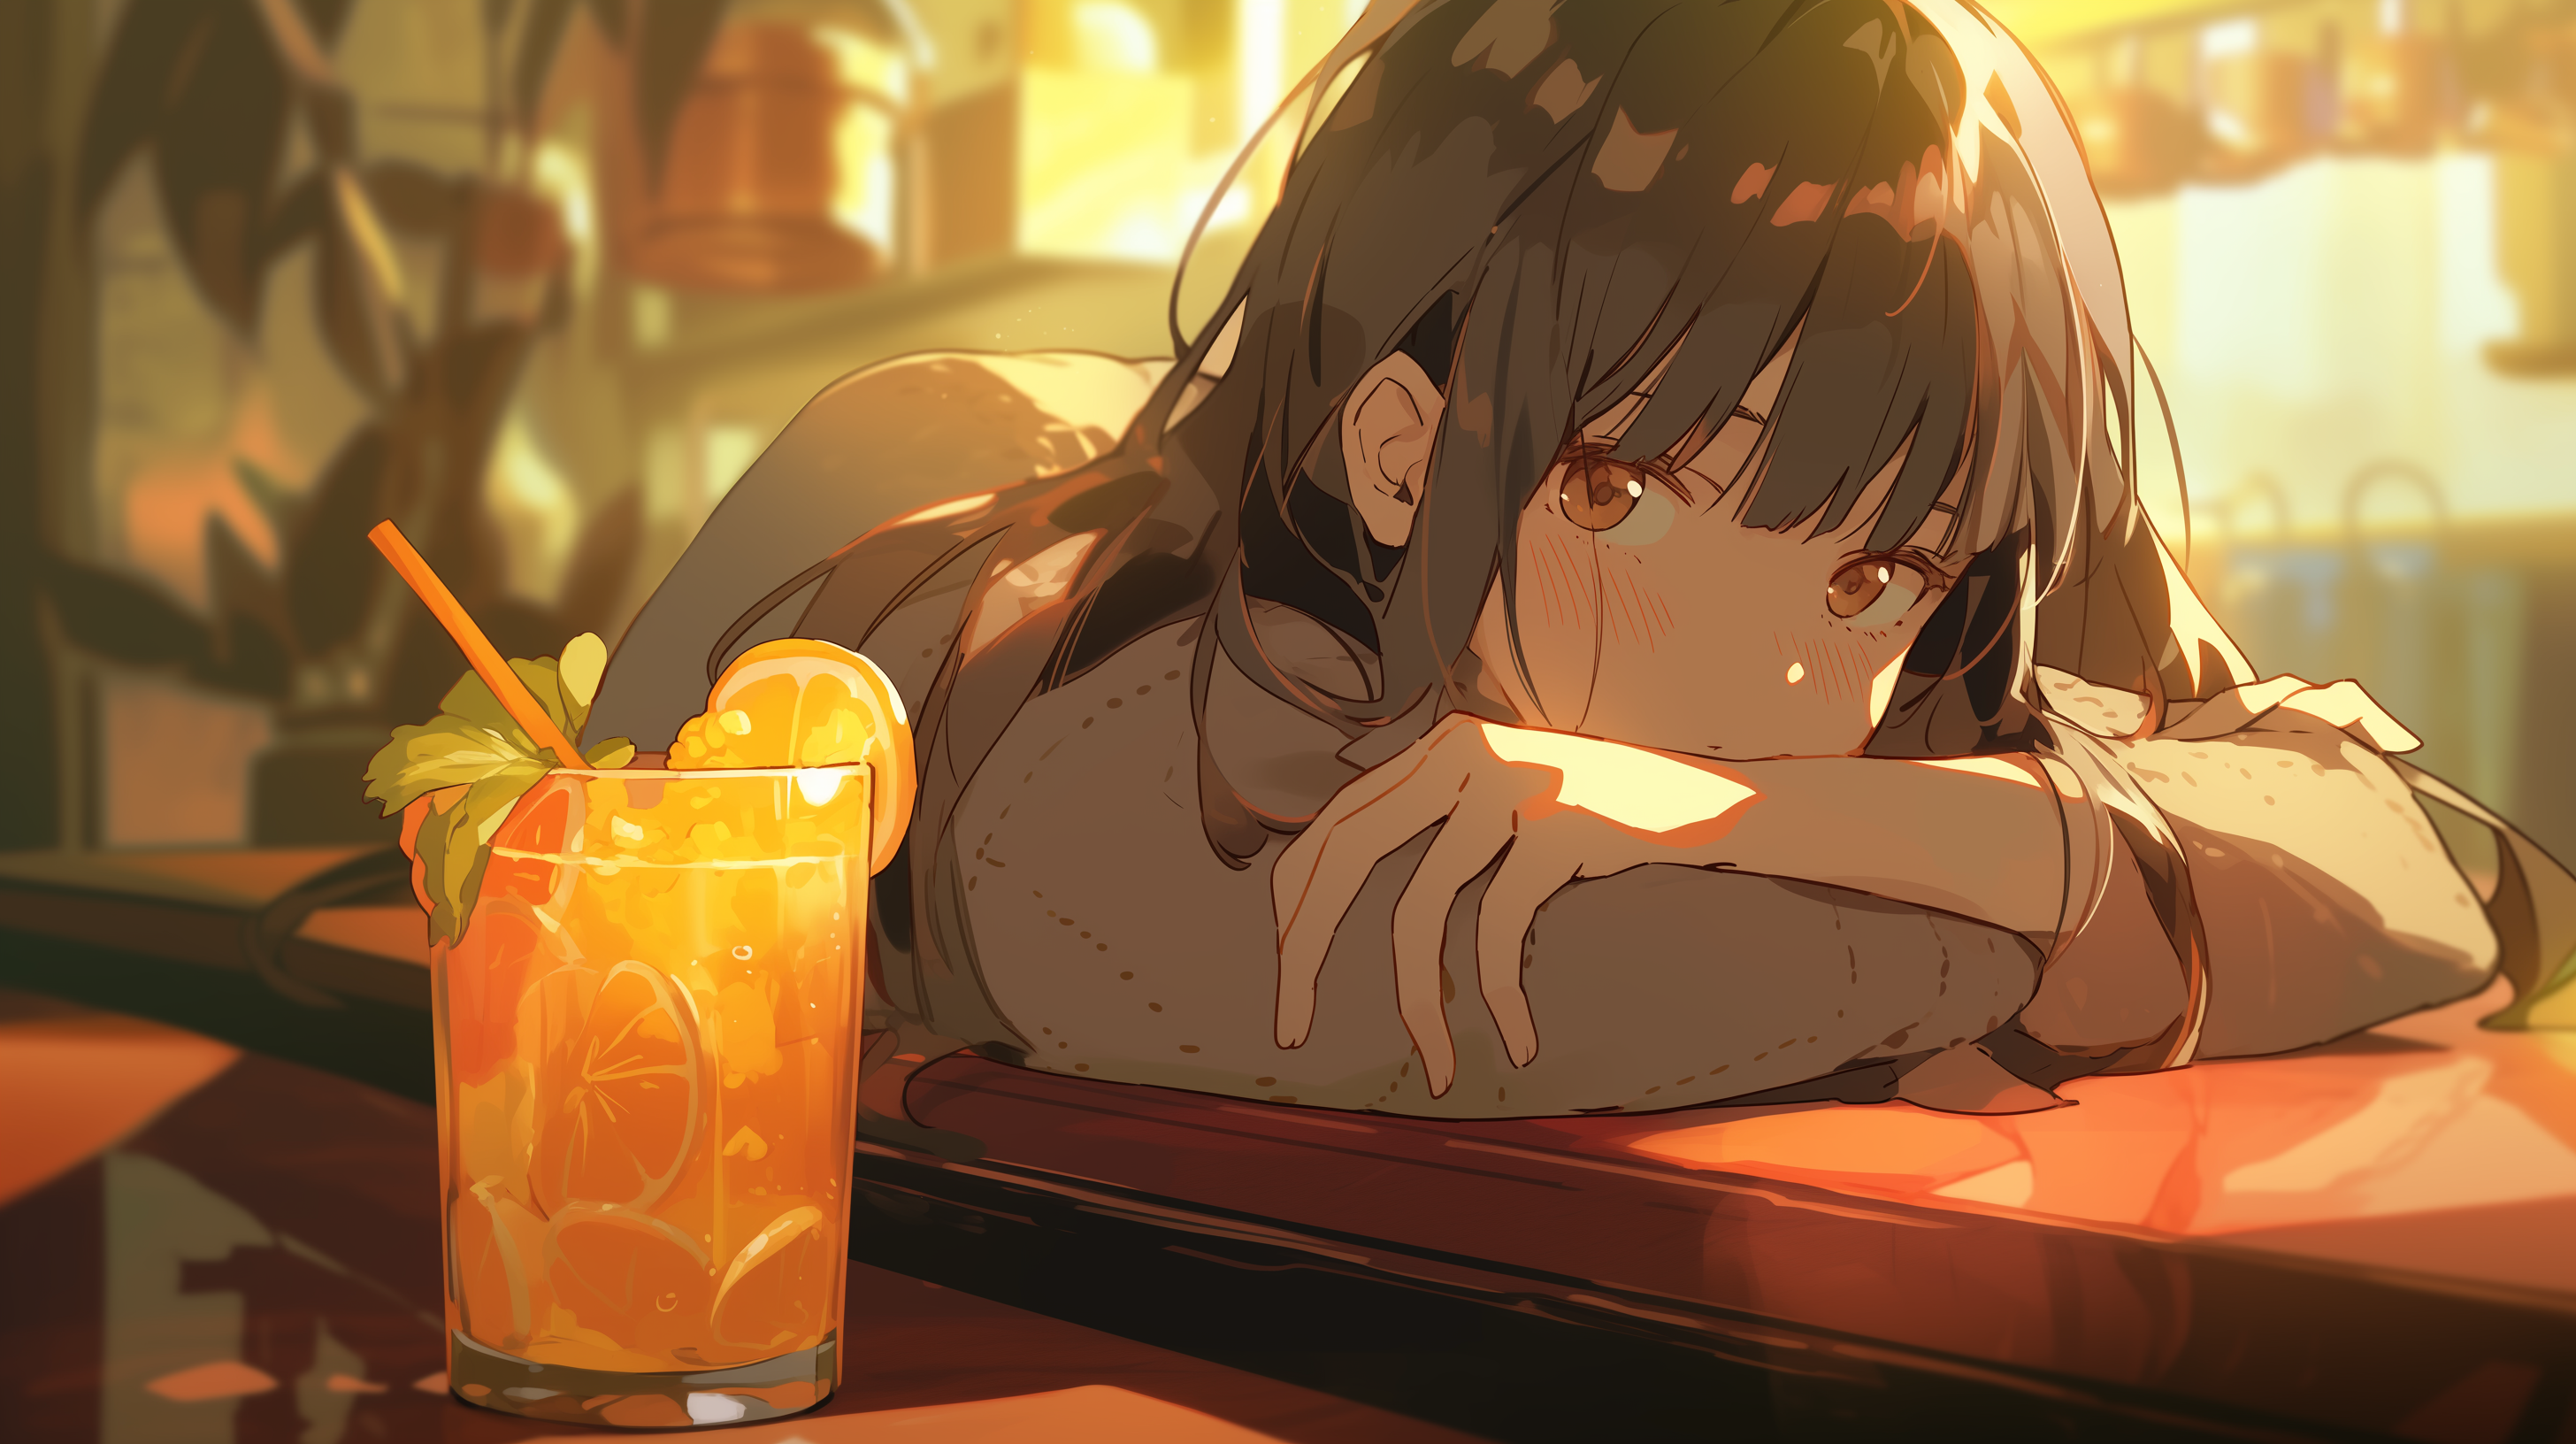 Ooyodo Relaxing - Anime Girls Wallpapers and Images - Desktop Nexus Groups